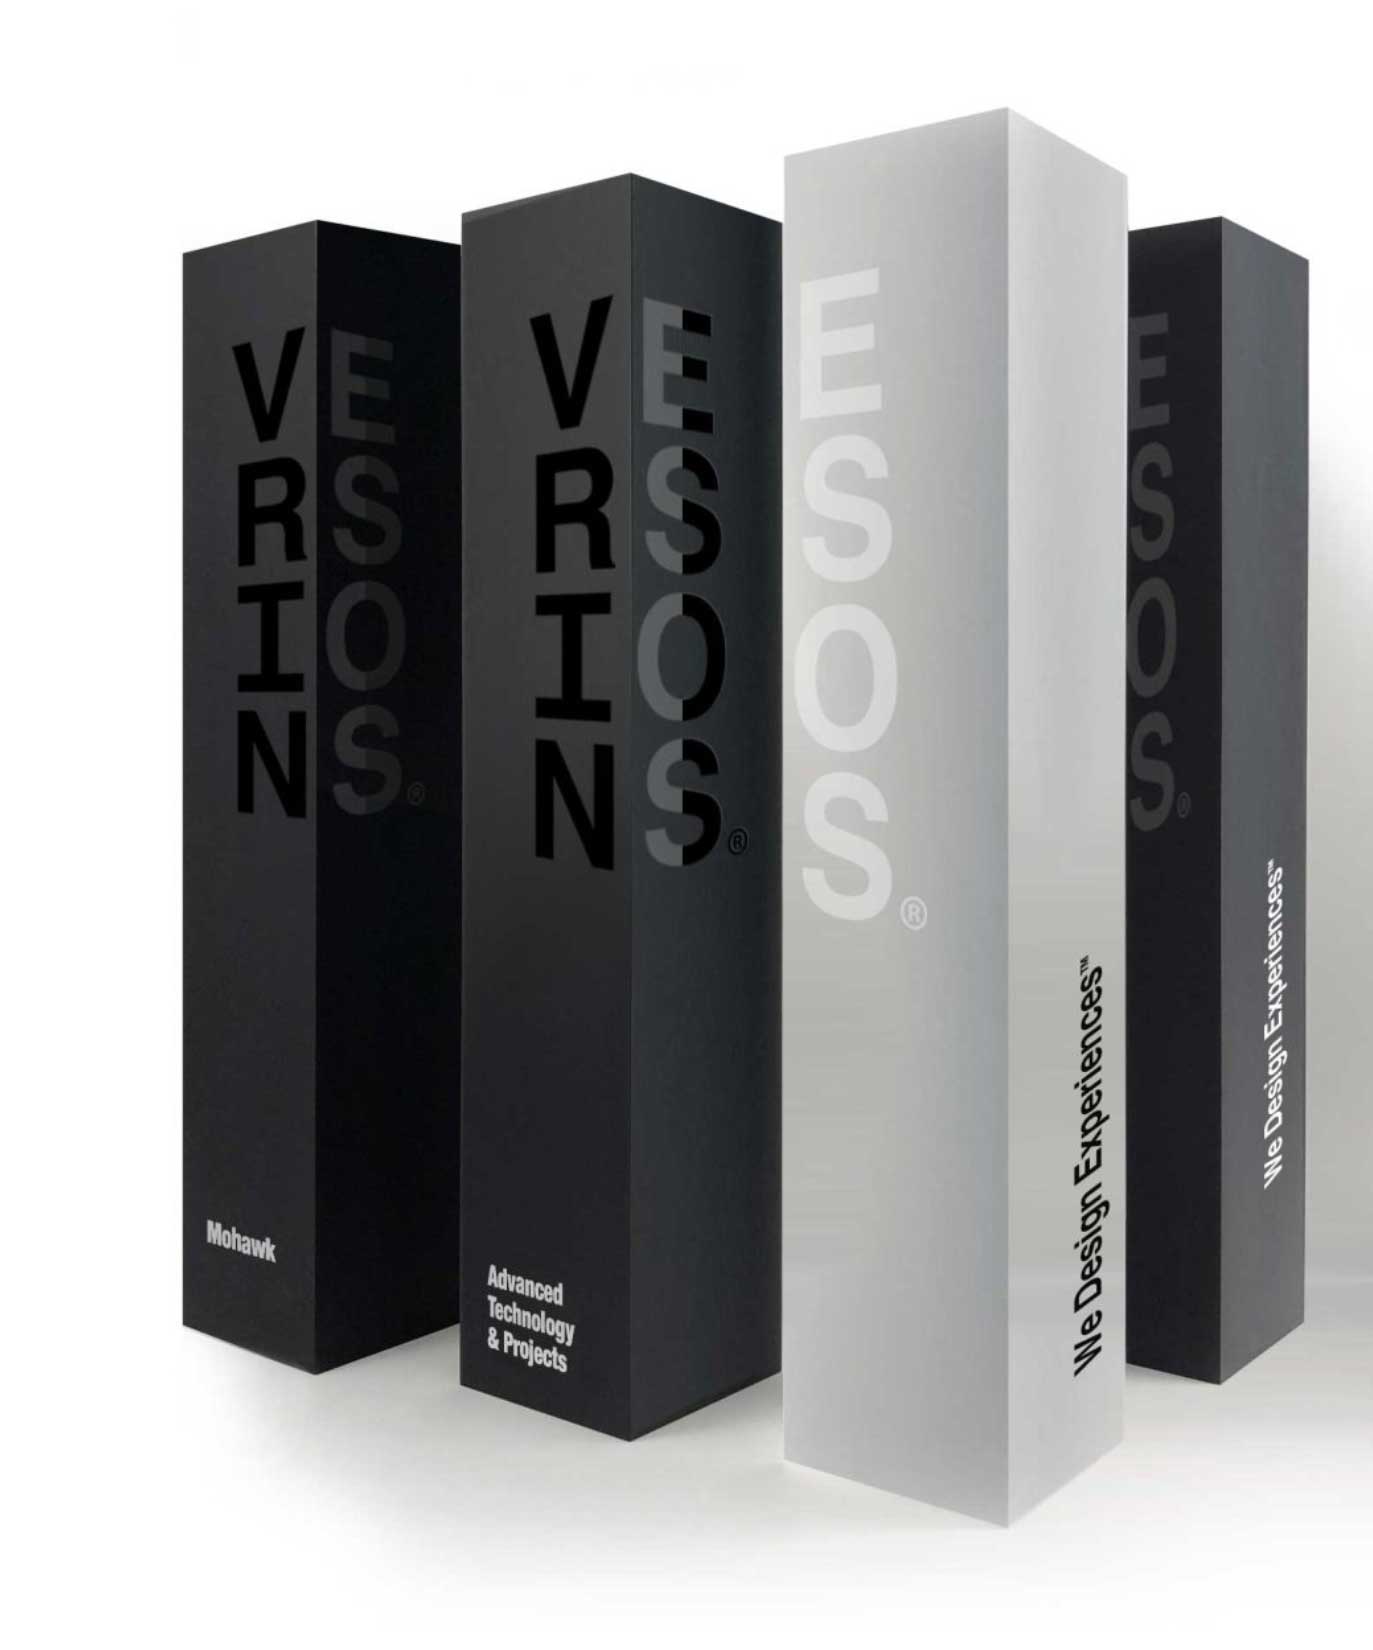 Versions Awards